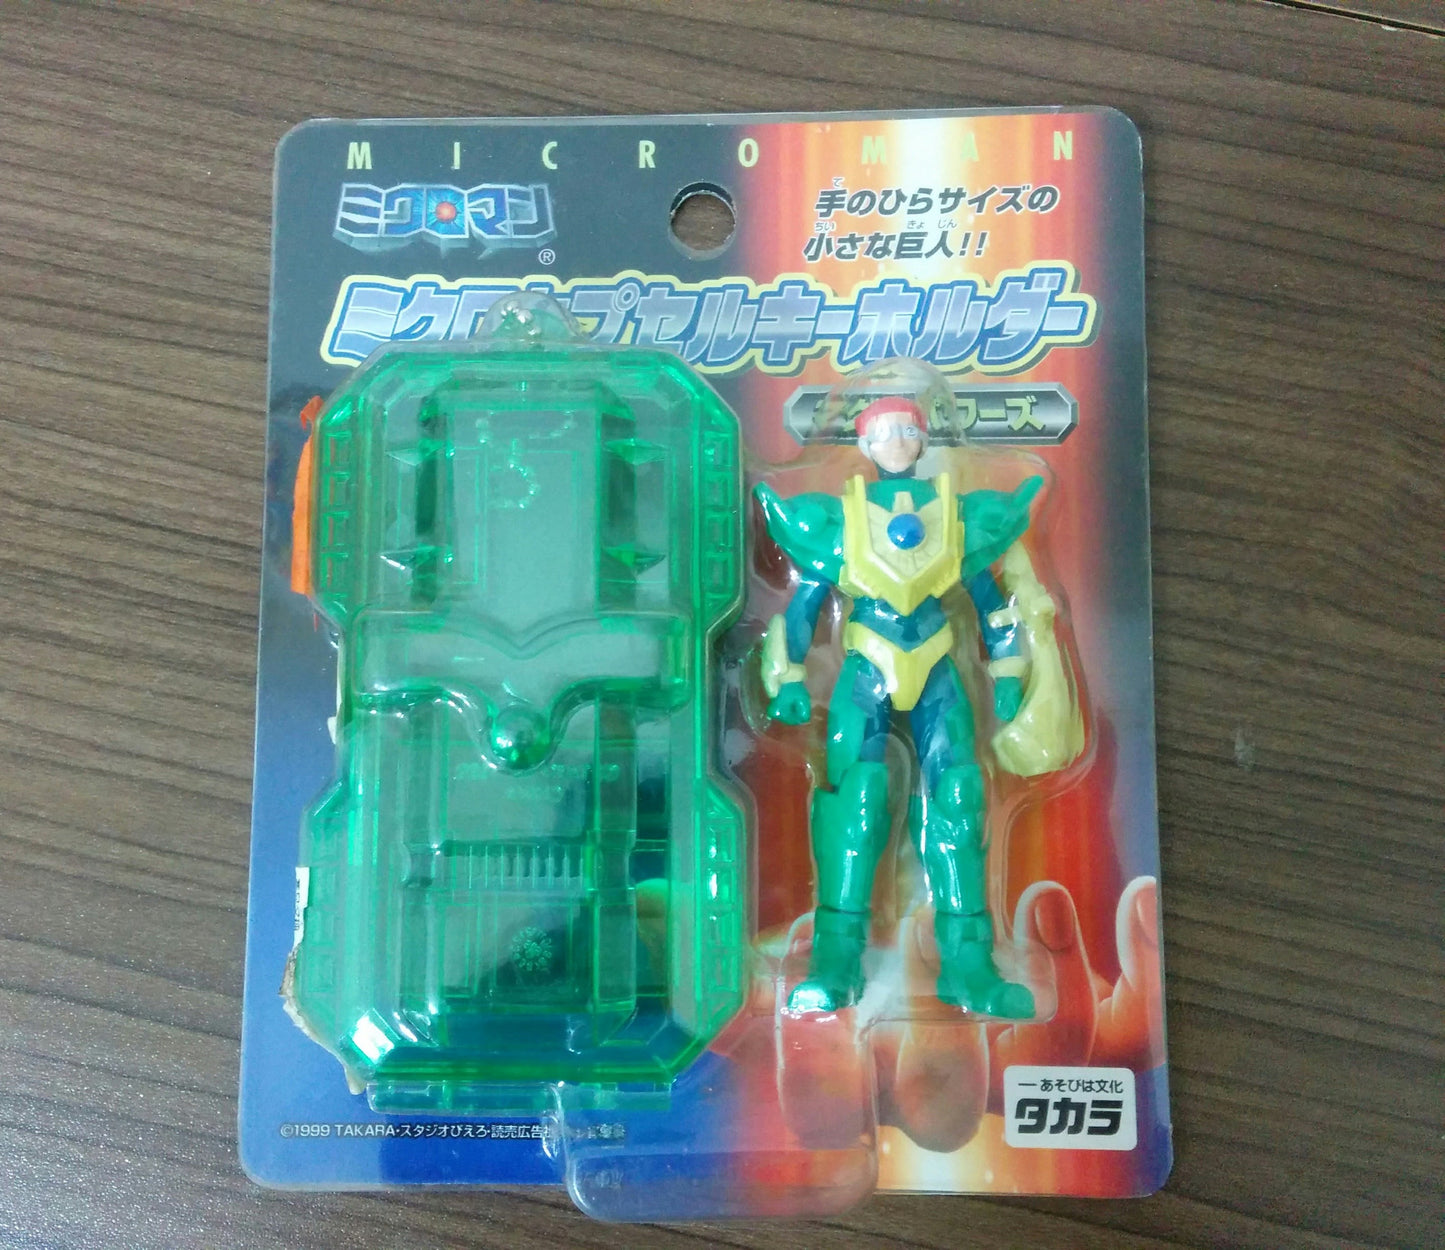 Takara 1999 Microman UFO Prize Anime style Magne Power Capsule Keychain Edison Ver Pvc Action Figure - Lavits Figure
